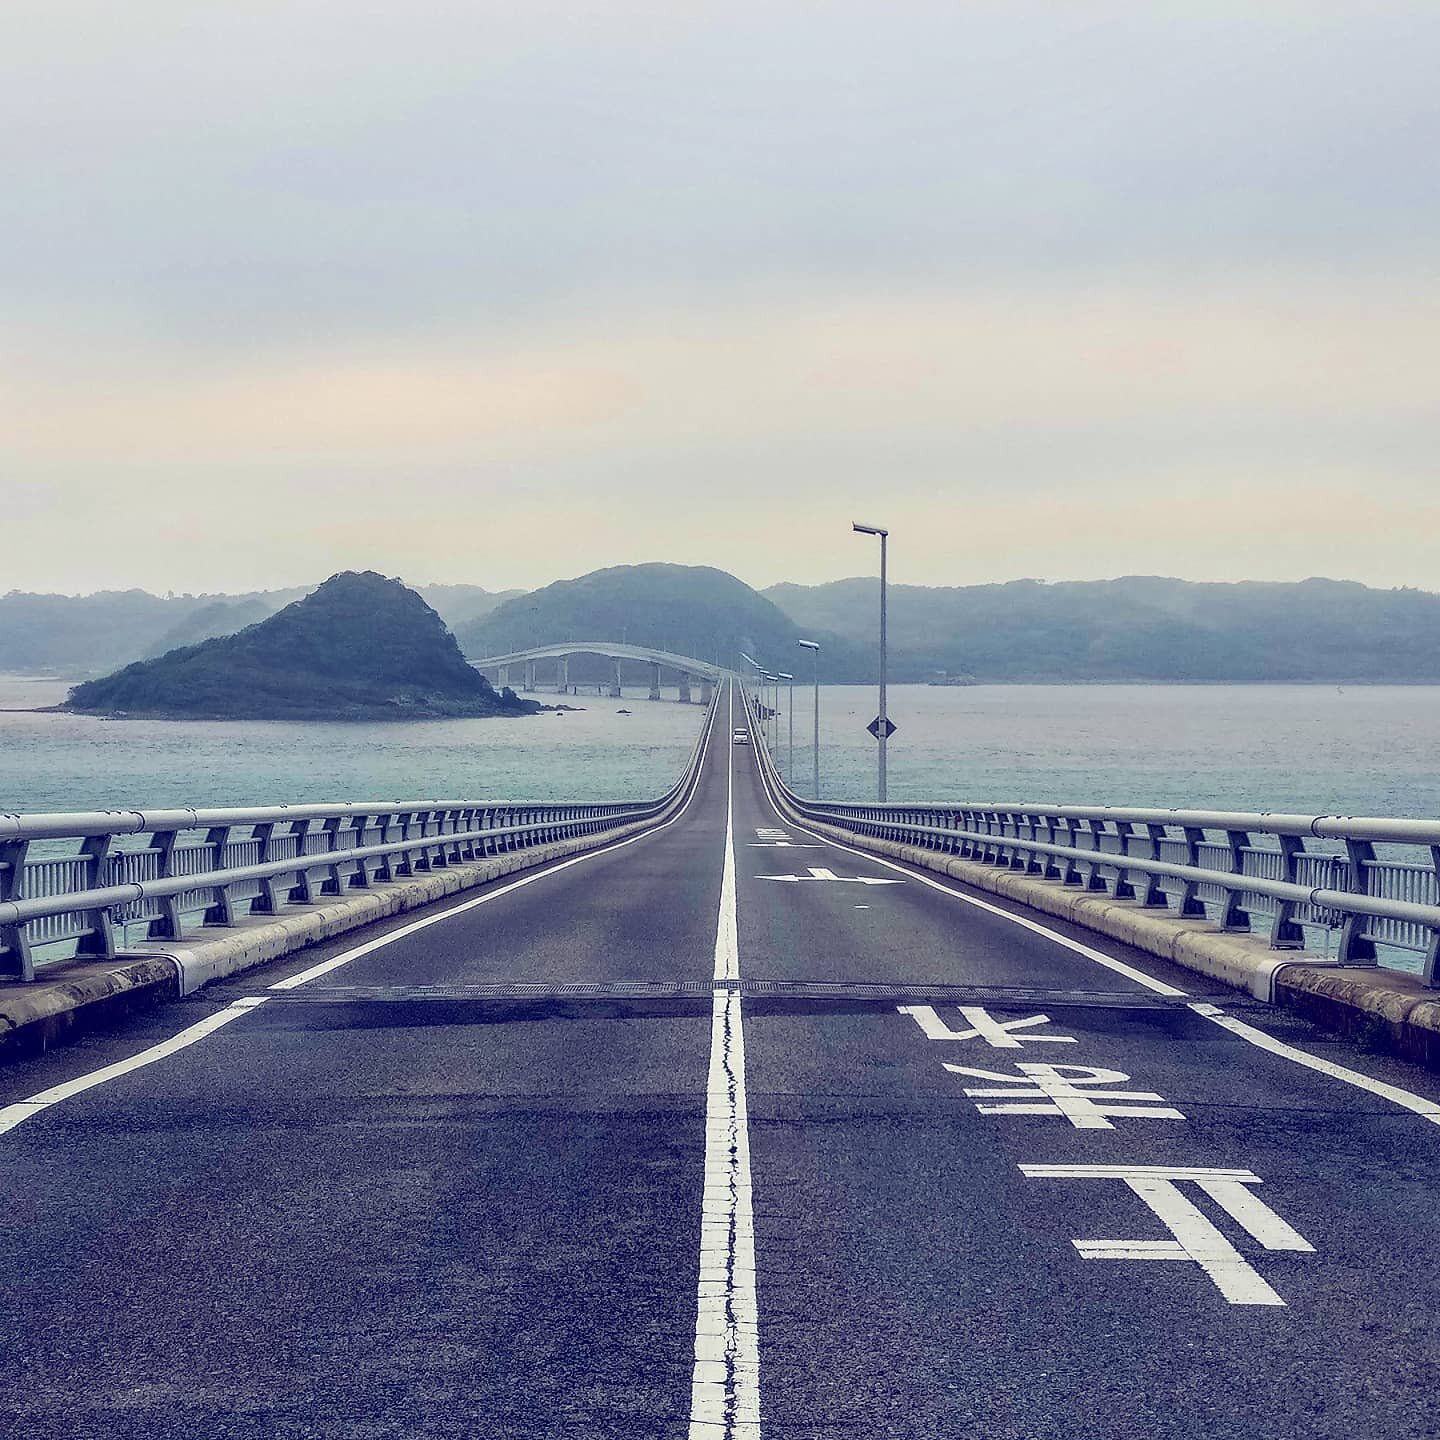 #tsunoshima bridge is in the southwestern prefecture of #yamaguci #japan. The bridge is 1780m (5840ft) in length and was built in the year 2000. 

#japan #bridge #bridges #bridgephotography #bridgesofinstagram #bridge #engineering #designinspiration 